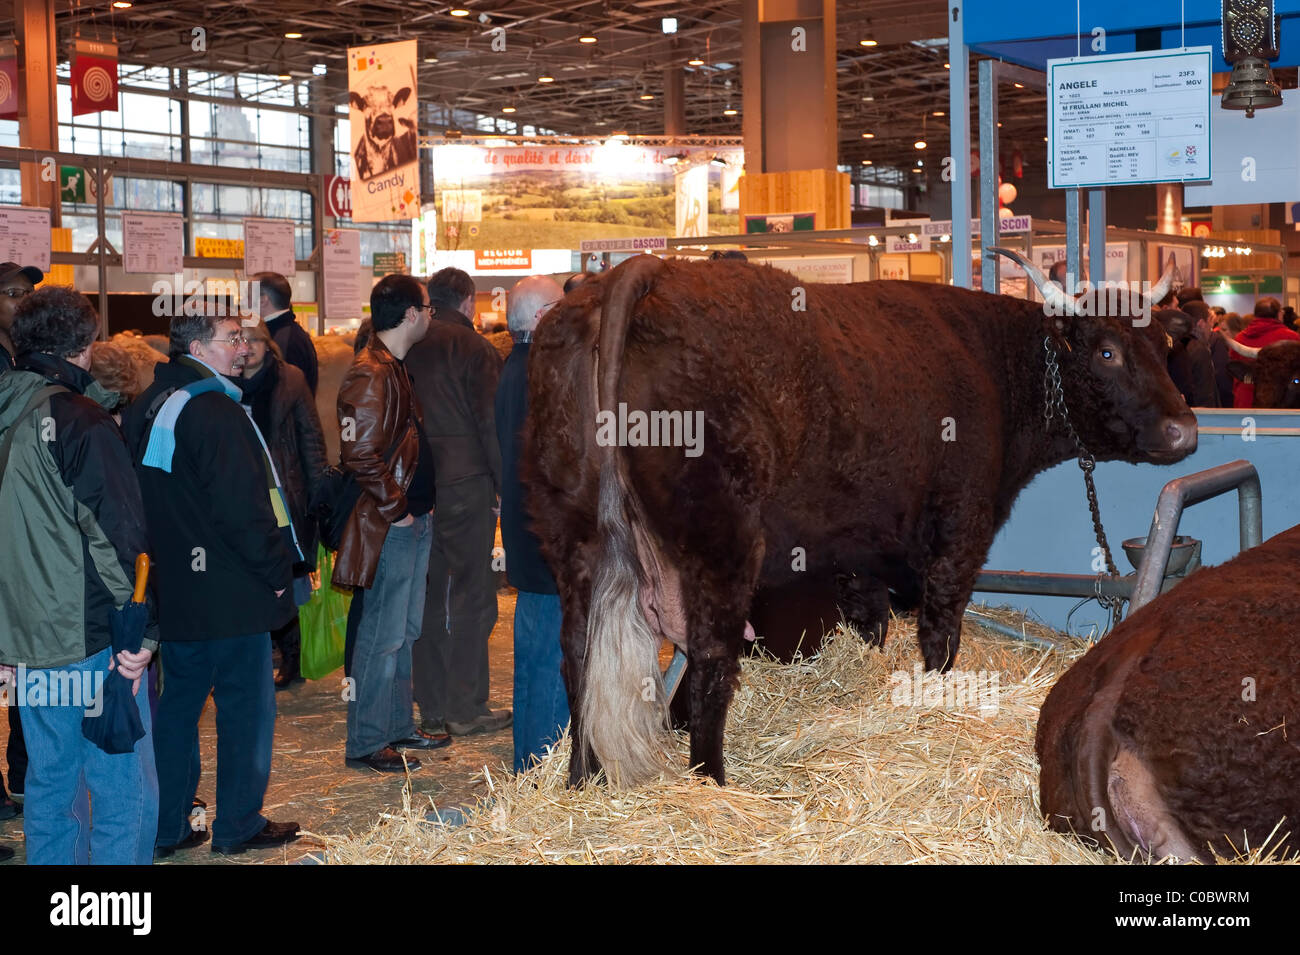 Paris, France - Agricultural Fair Stock Photo